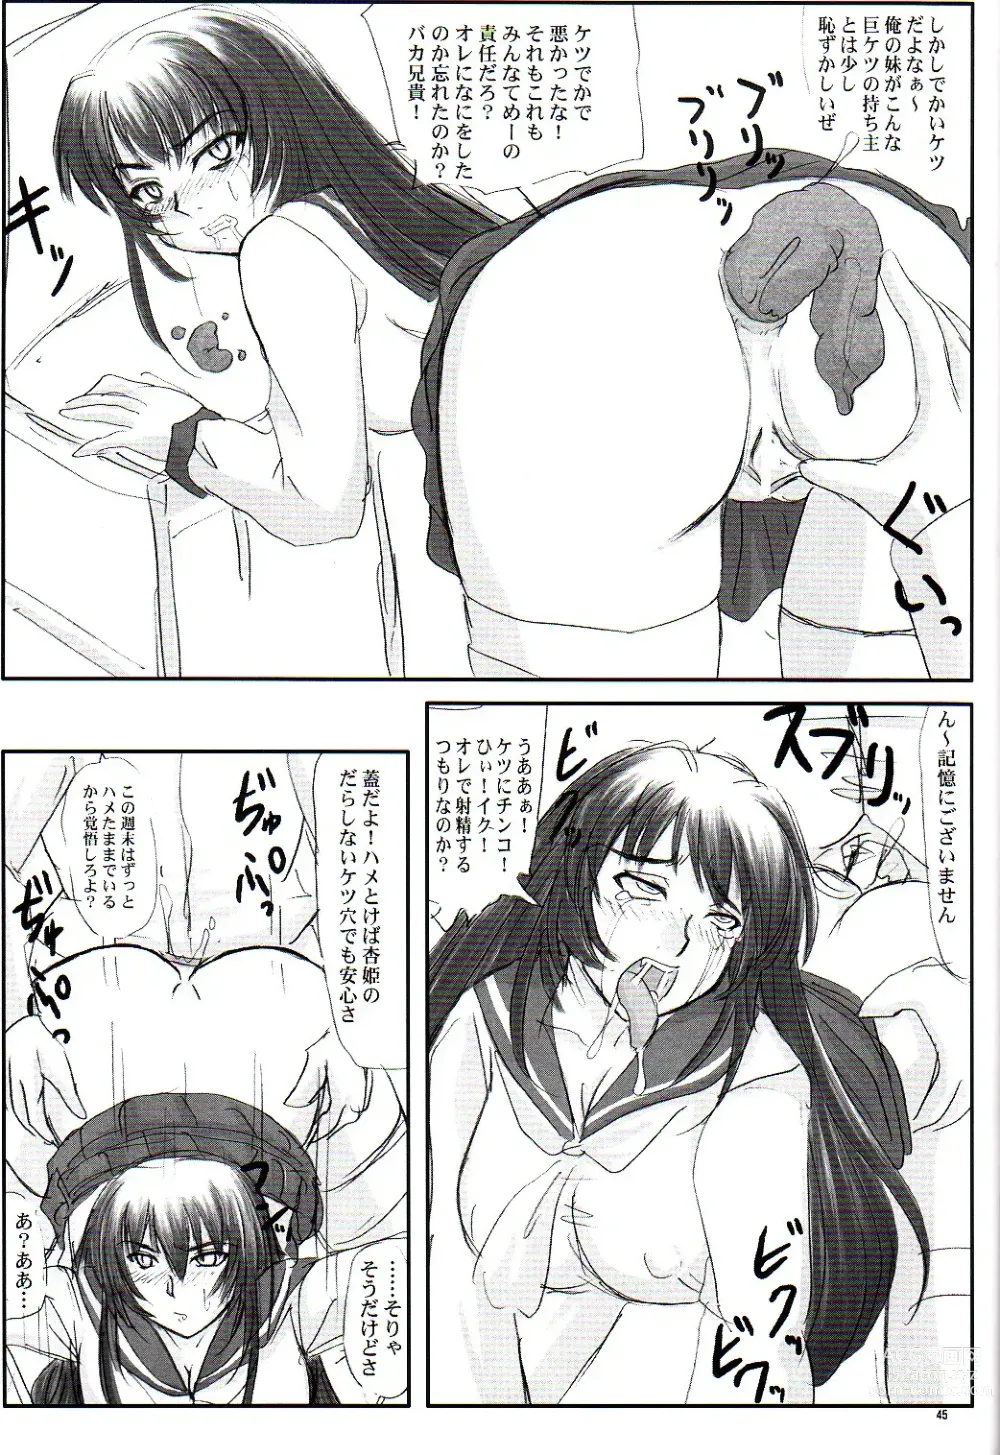 Page 45 of doujinshi Tatakae! Kyouhime-sama!!